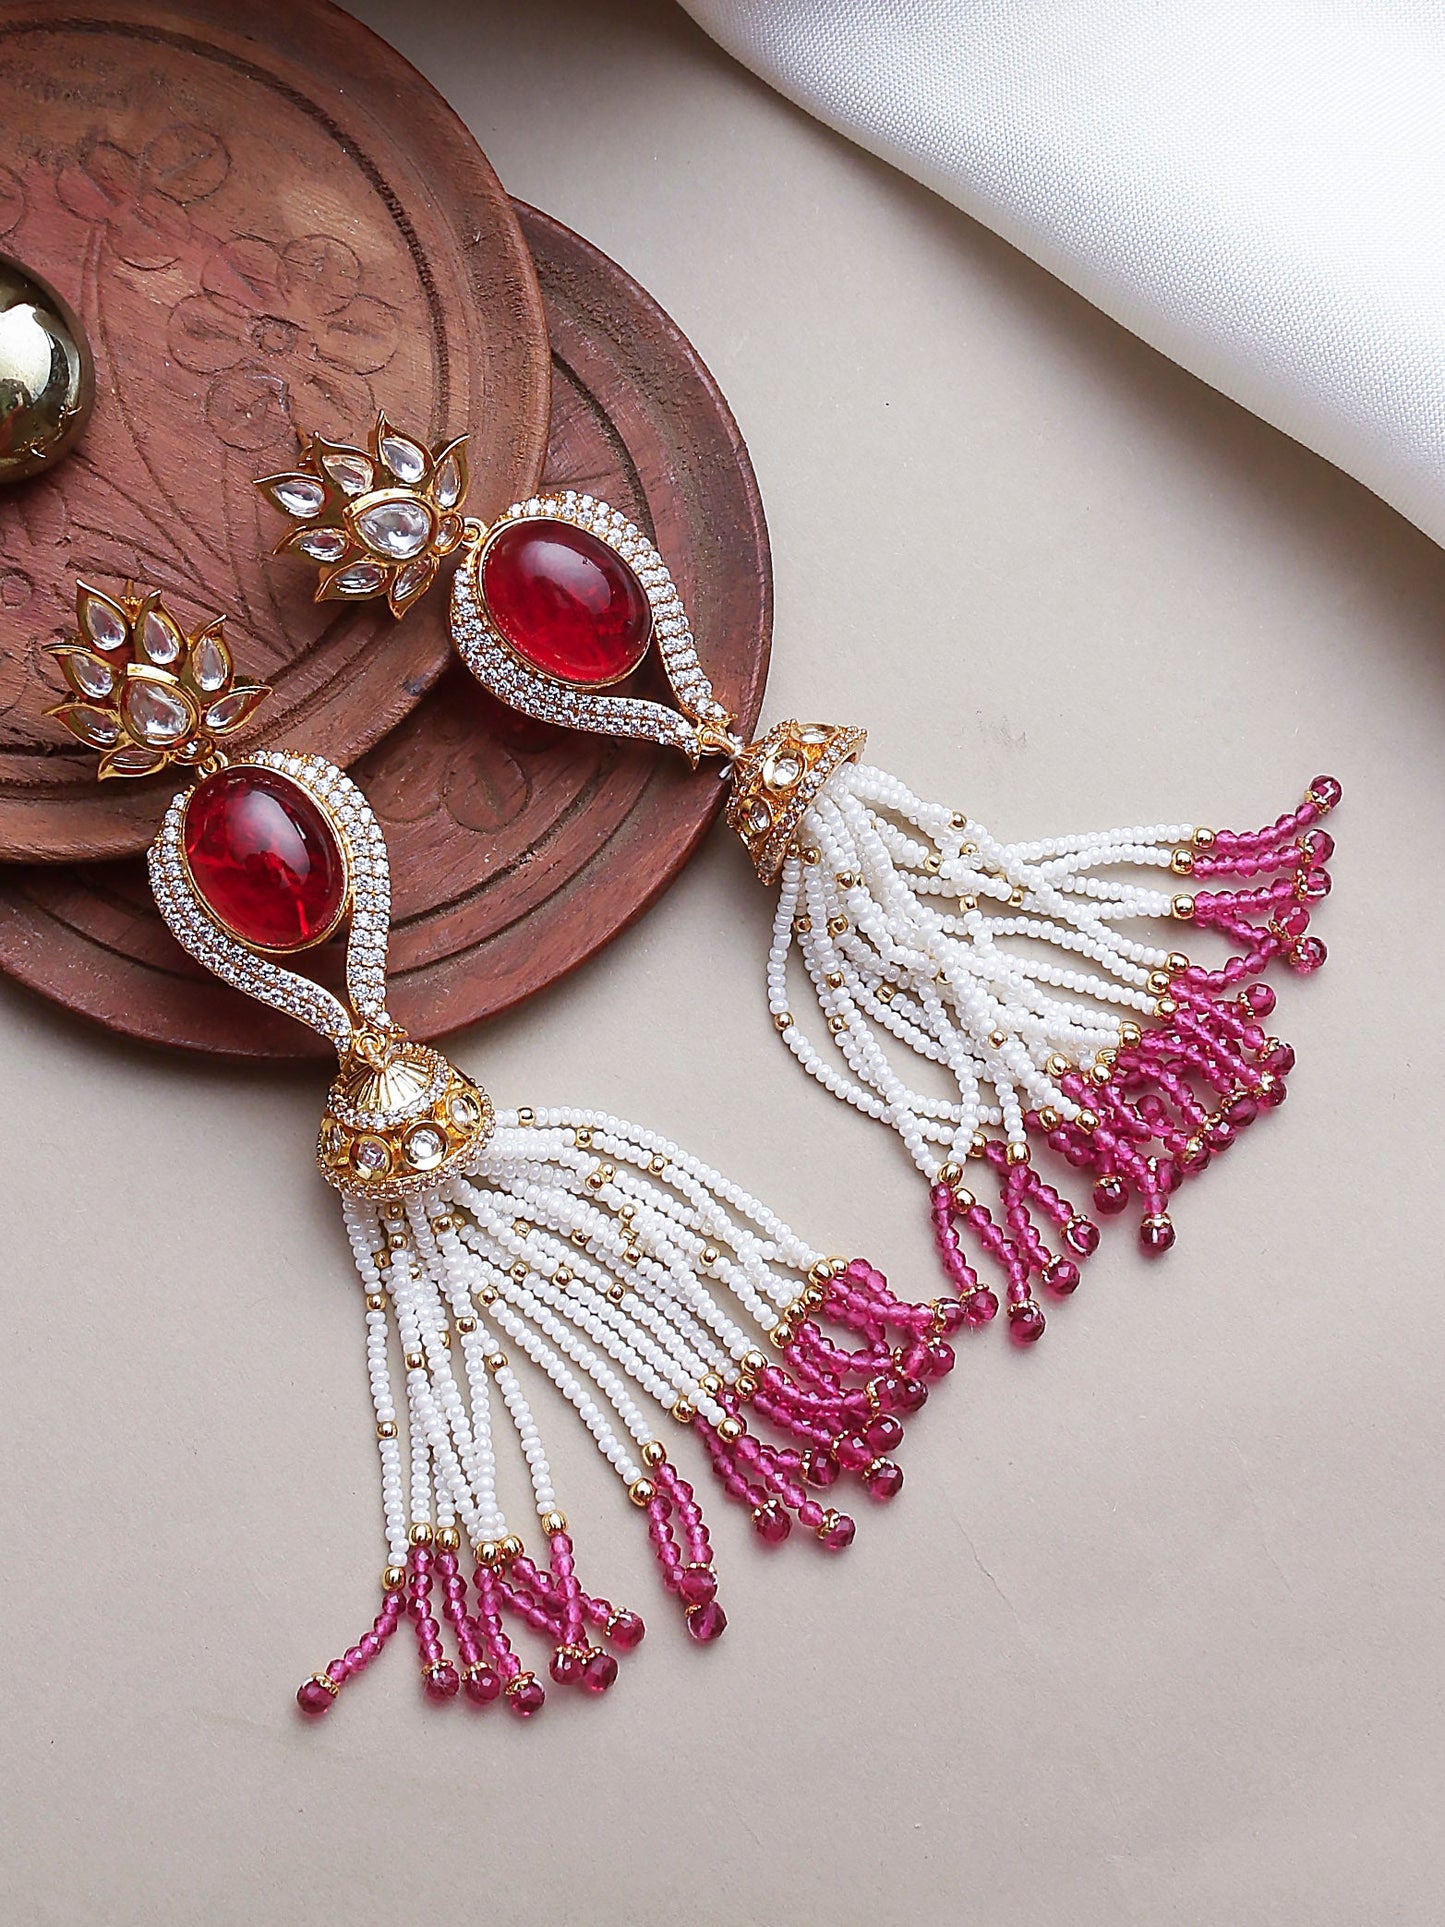 Swisni Alloy Golden Jhumki Earrings with White N Pink Beads For Women|For Girls|Gifting|Anniversary|Birthday|Girlfriend